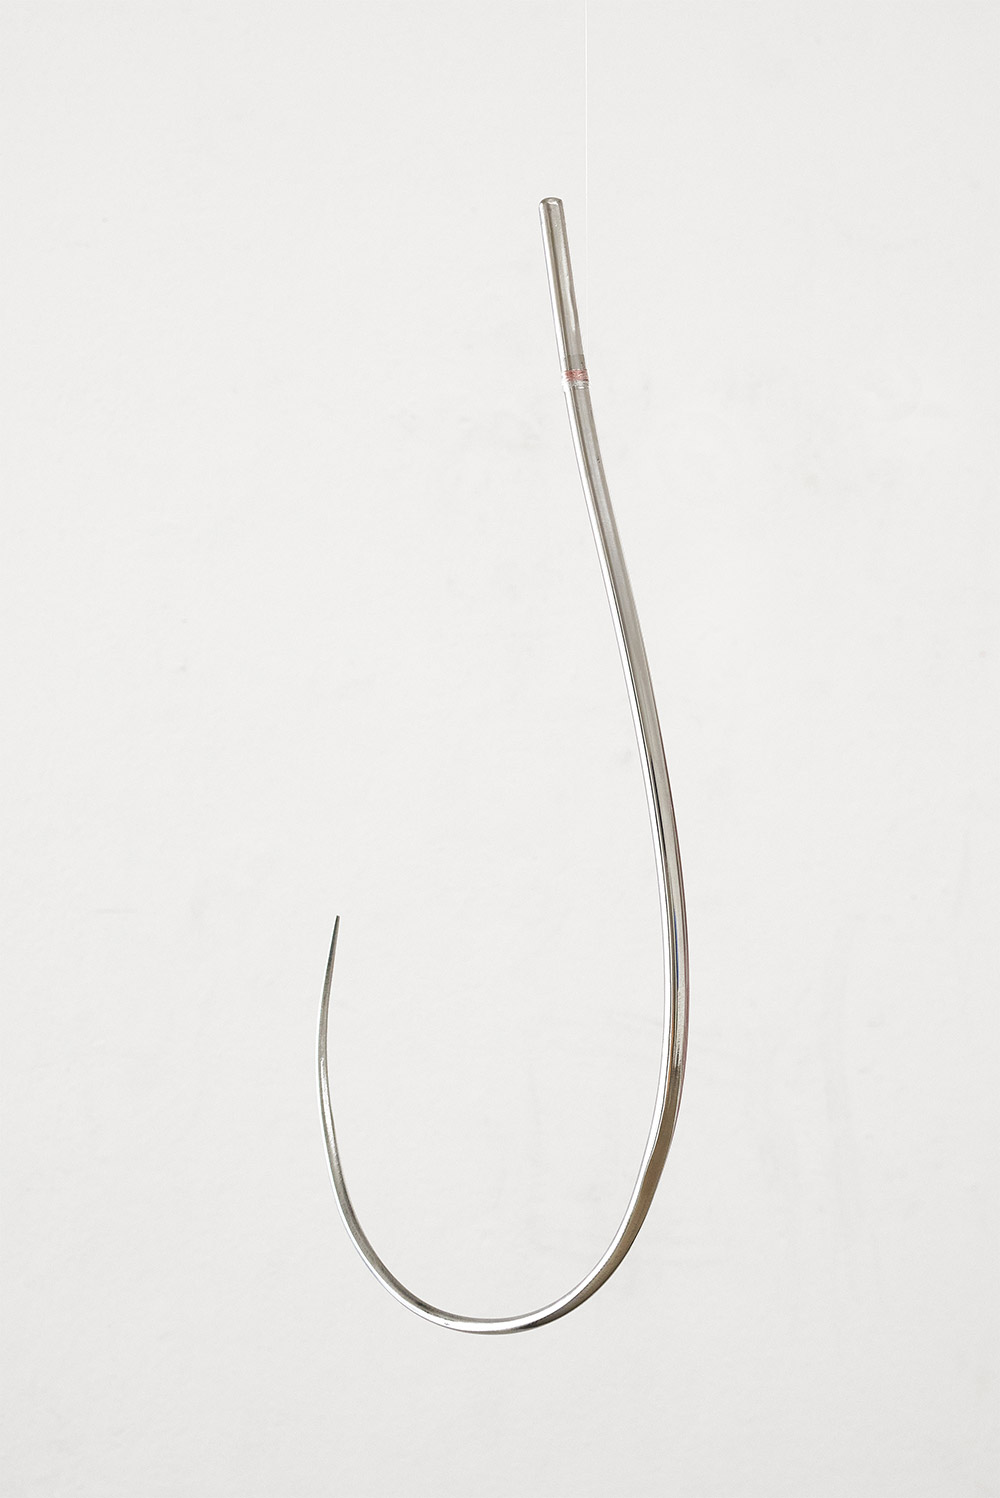 Romana Drdova, Untouchable, 2021, metallic construction, leather, chromed hook, dimension 180x50cm, detail